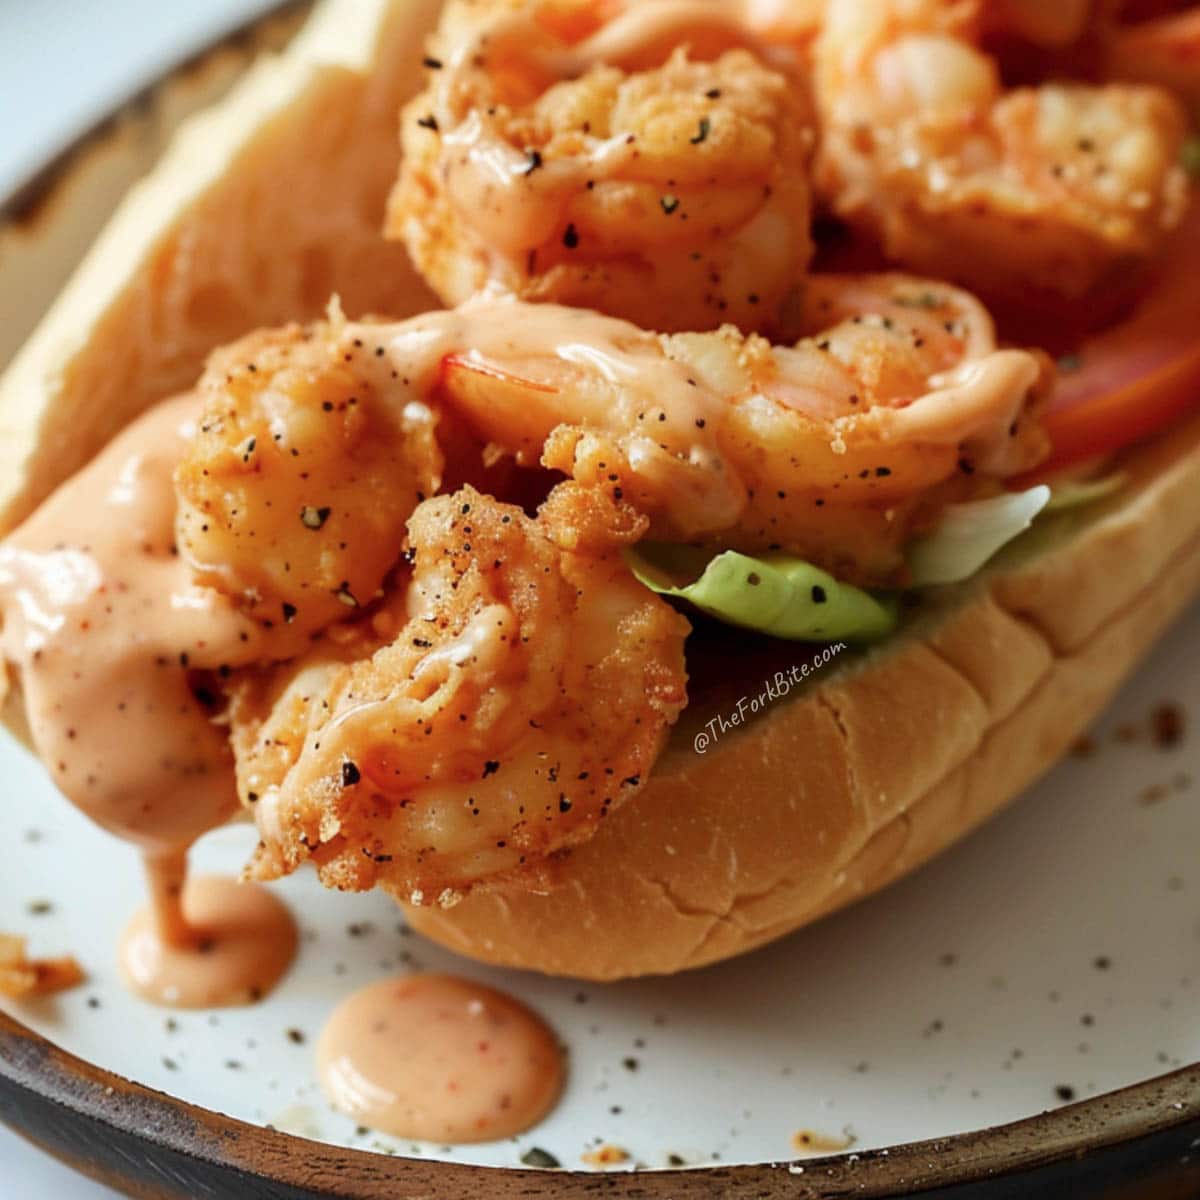 Shrimp po' boy sandwich with crispy fried shrimp, tangy remoulade, on Hoagie roll bread.